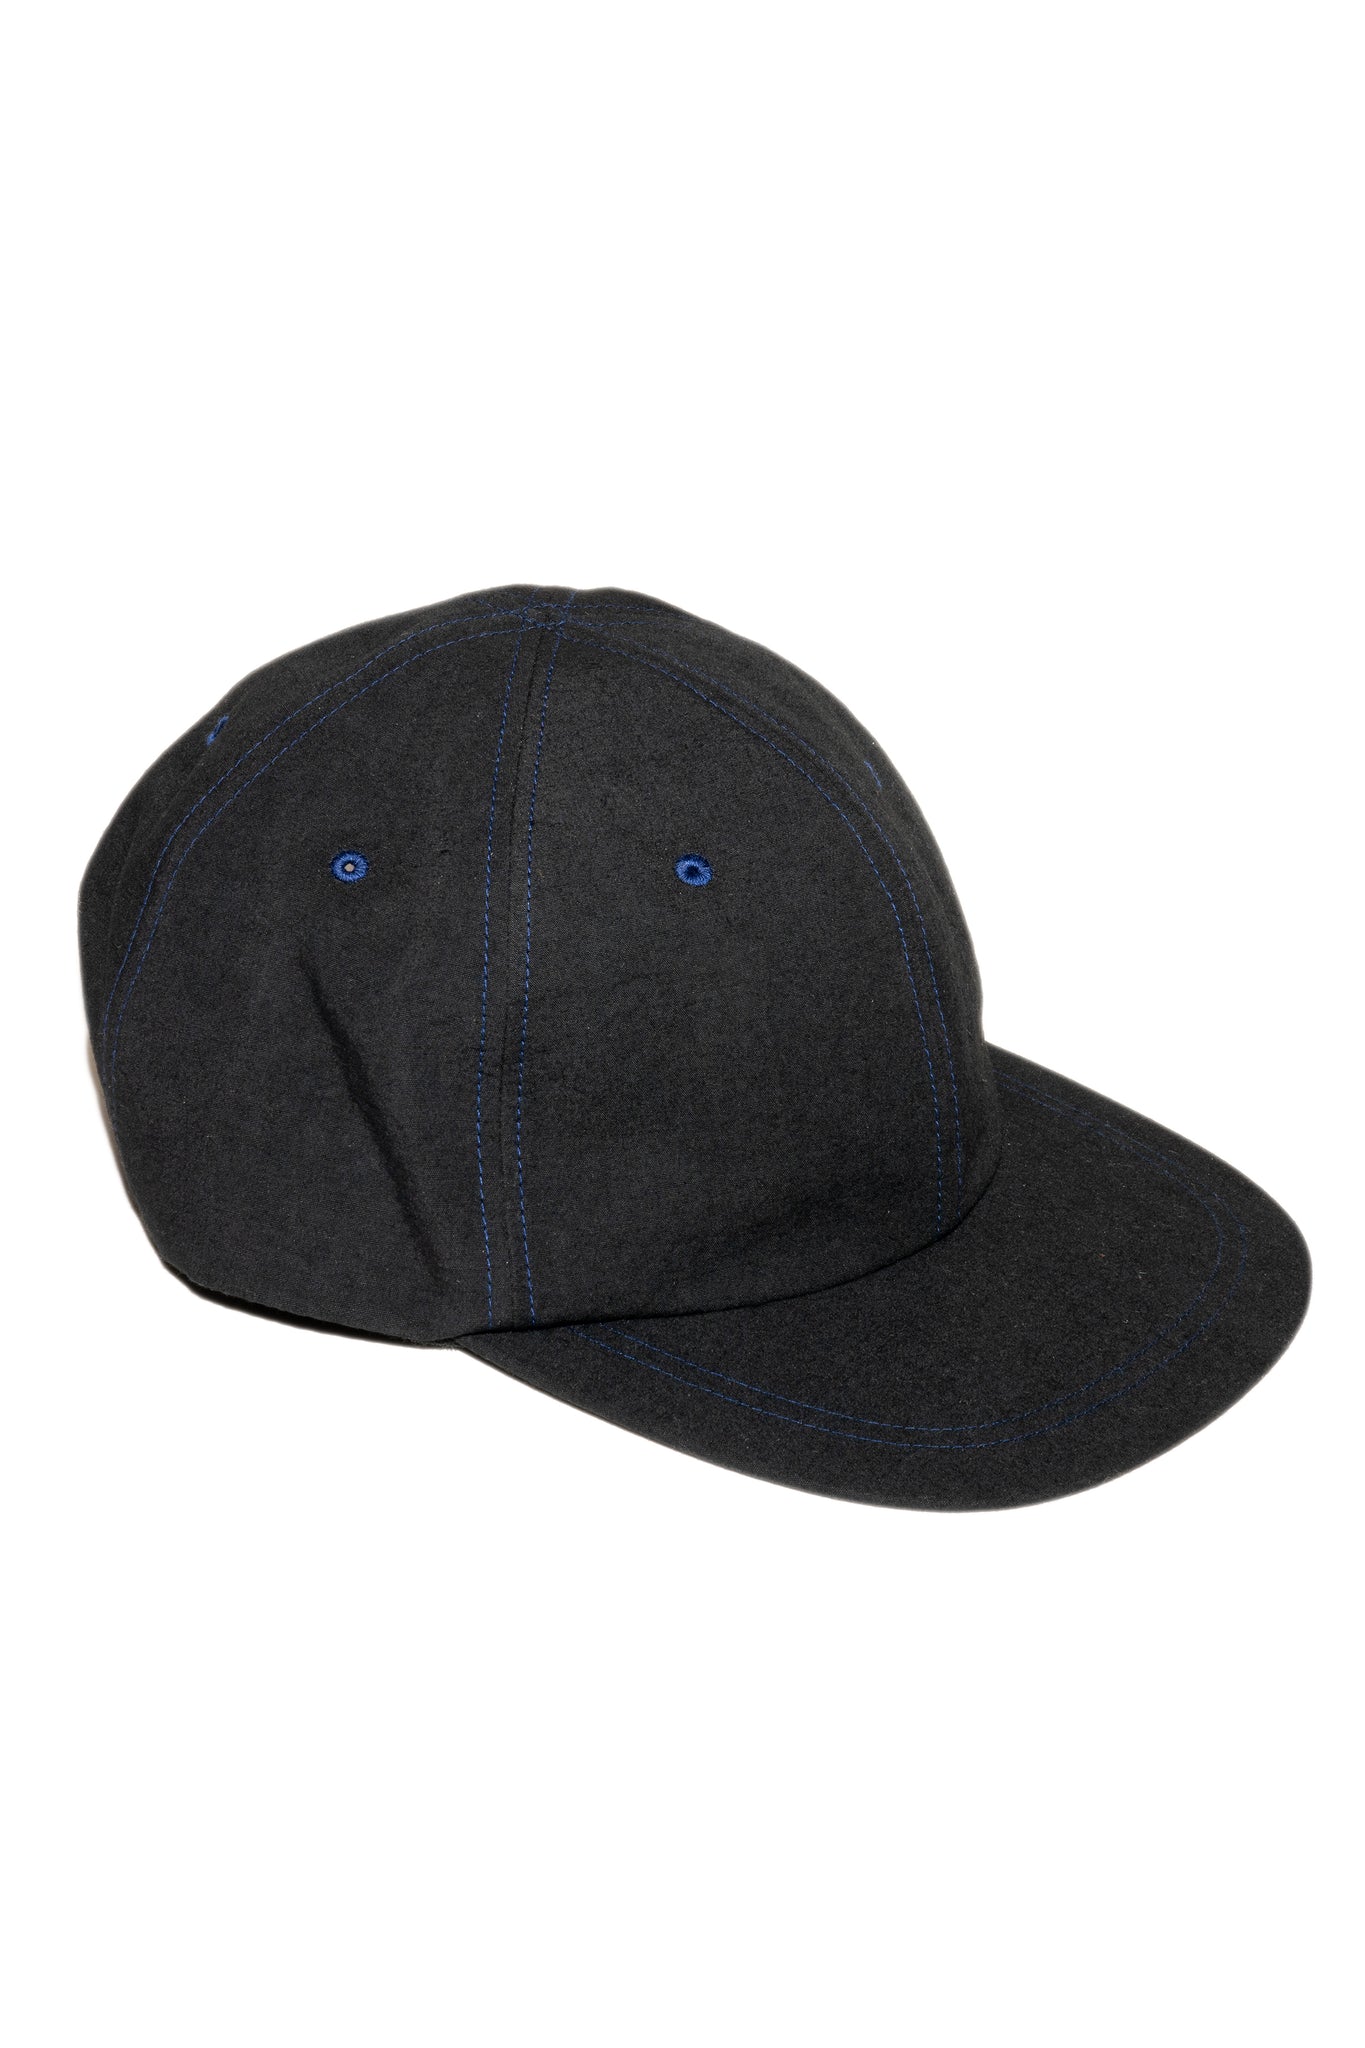 JHAKX - CLASSIC "HEMP" HAT IN BLACK/BLUE